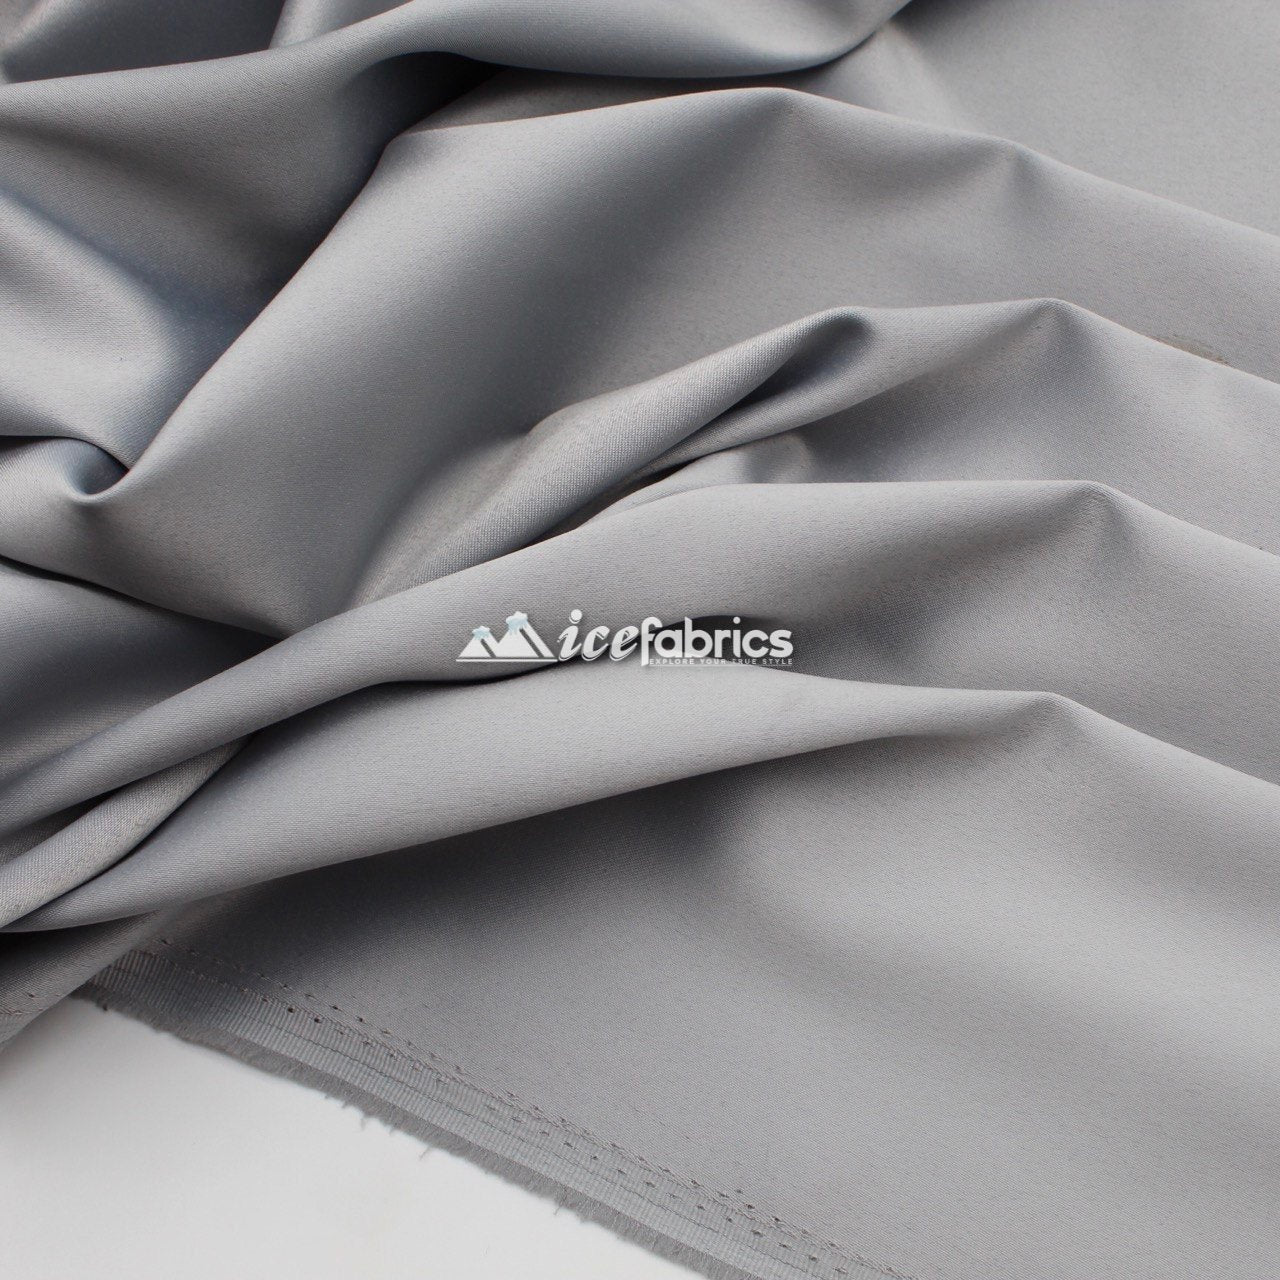 Thick Silky Armani %3 Stretch Shiny Satin Fabric By The Roll (20 YARD)Satin FabricICEFABRICICE FABRICSSilverBy The Roll (60" Wide)Thick Silky Armani %3 Stretch Shiny Satin Fabric By The Roll (20 YARD) ICEFABRIC